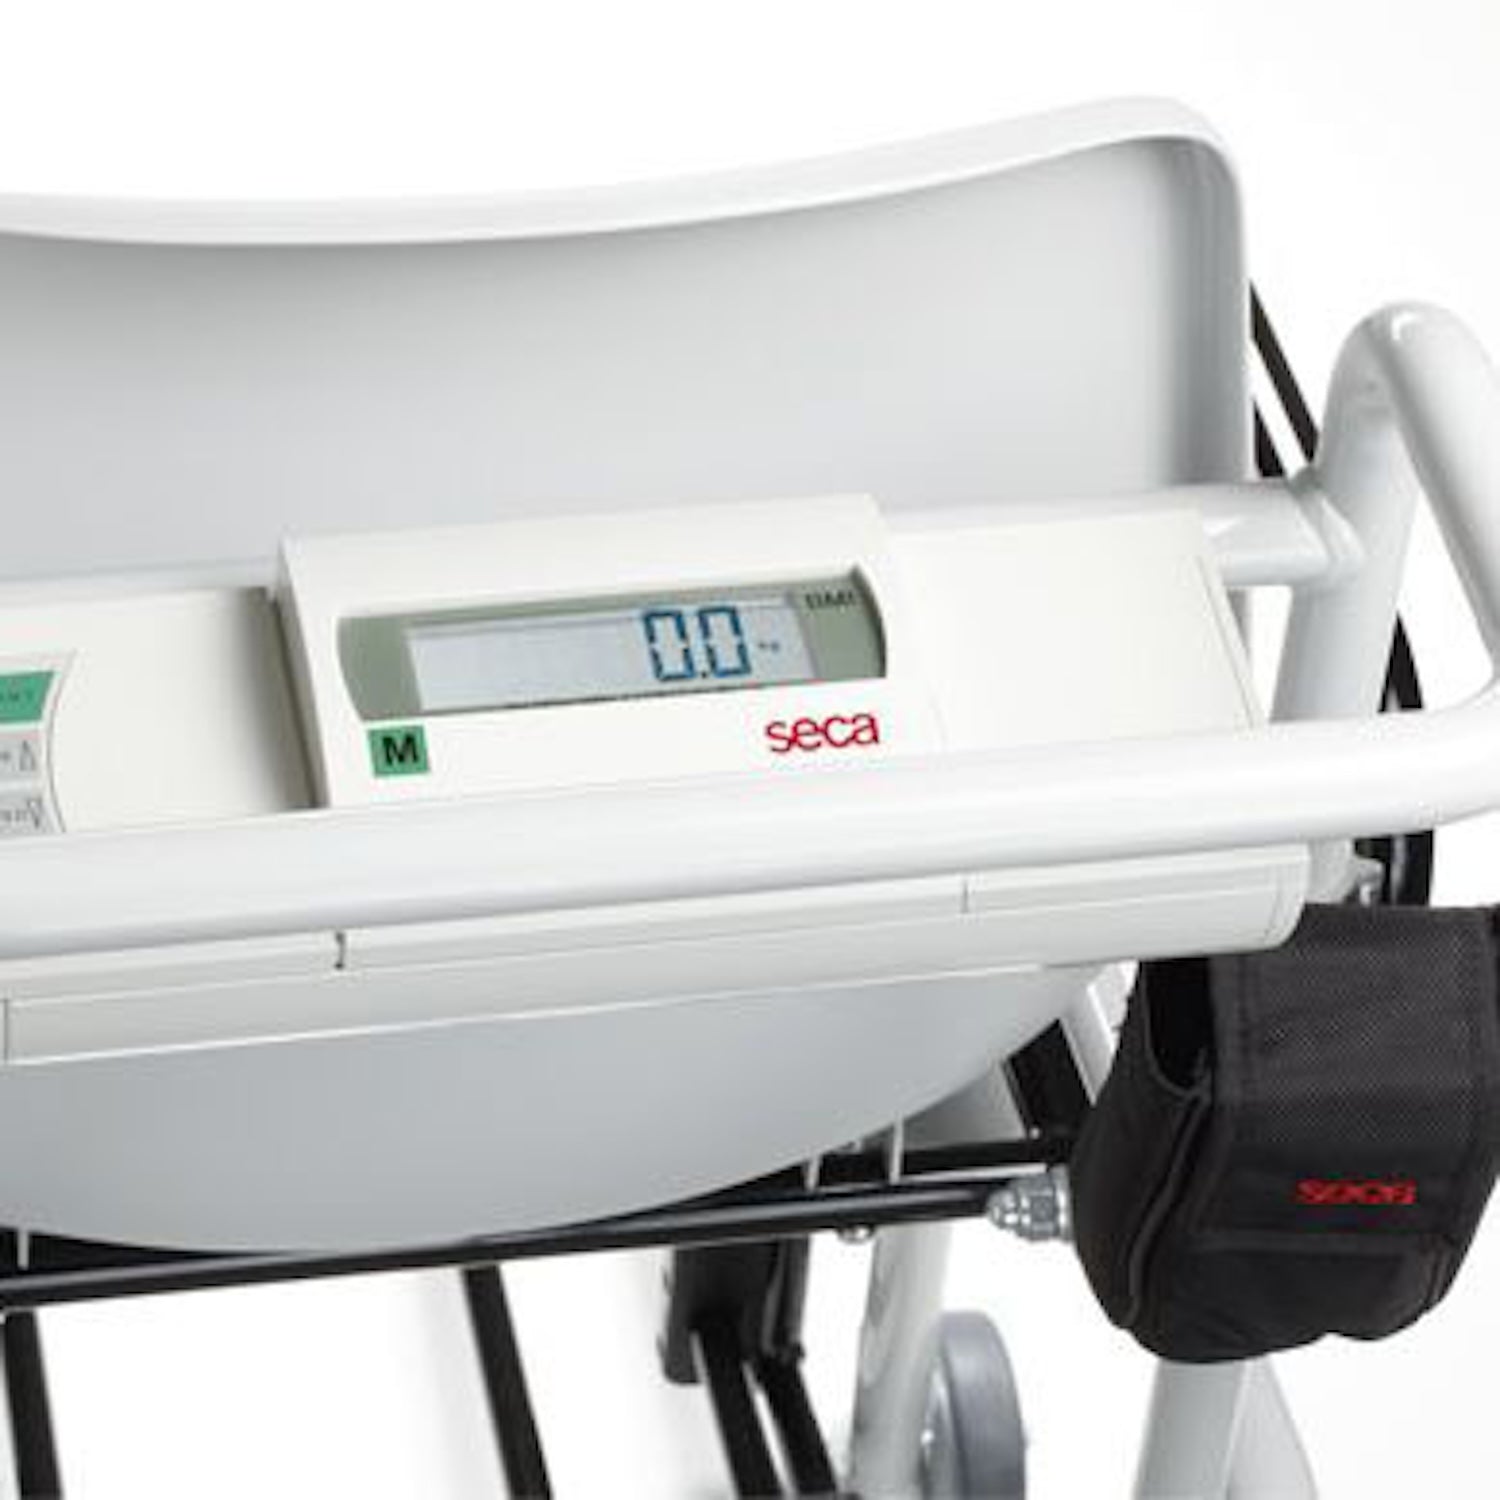 seca 959 Class III Approved Digital Chair Scale (3)